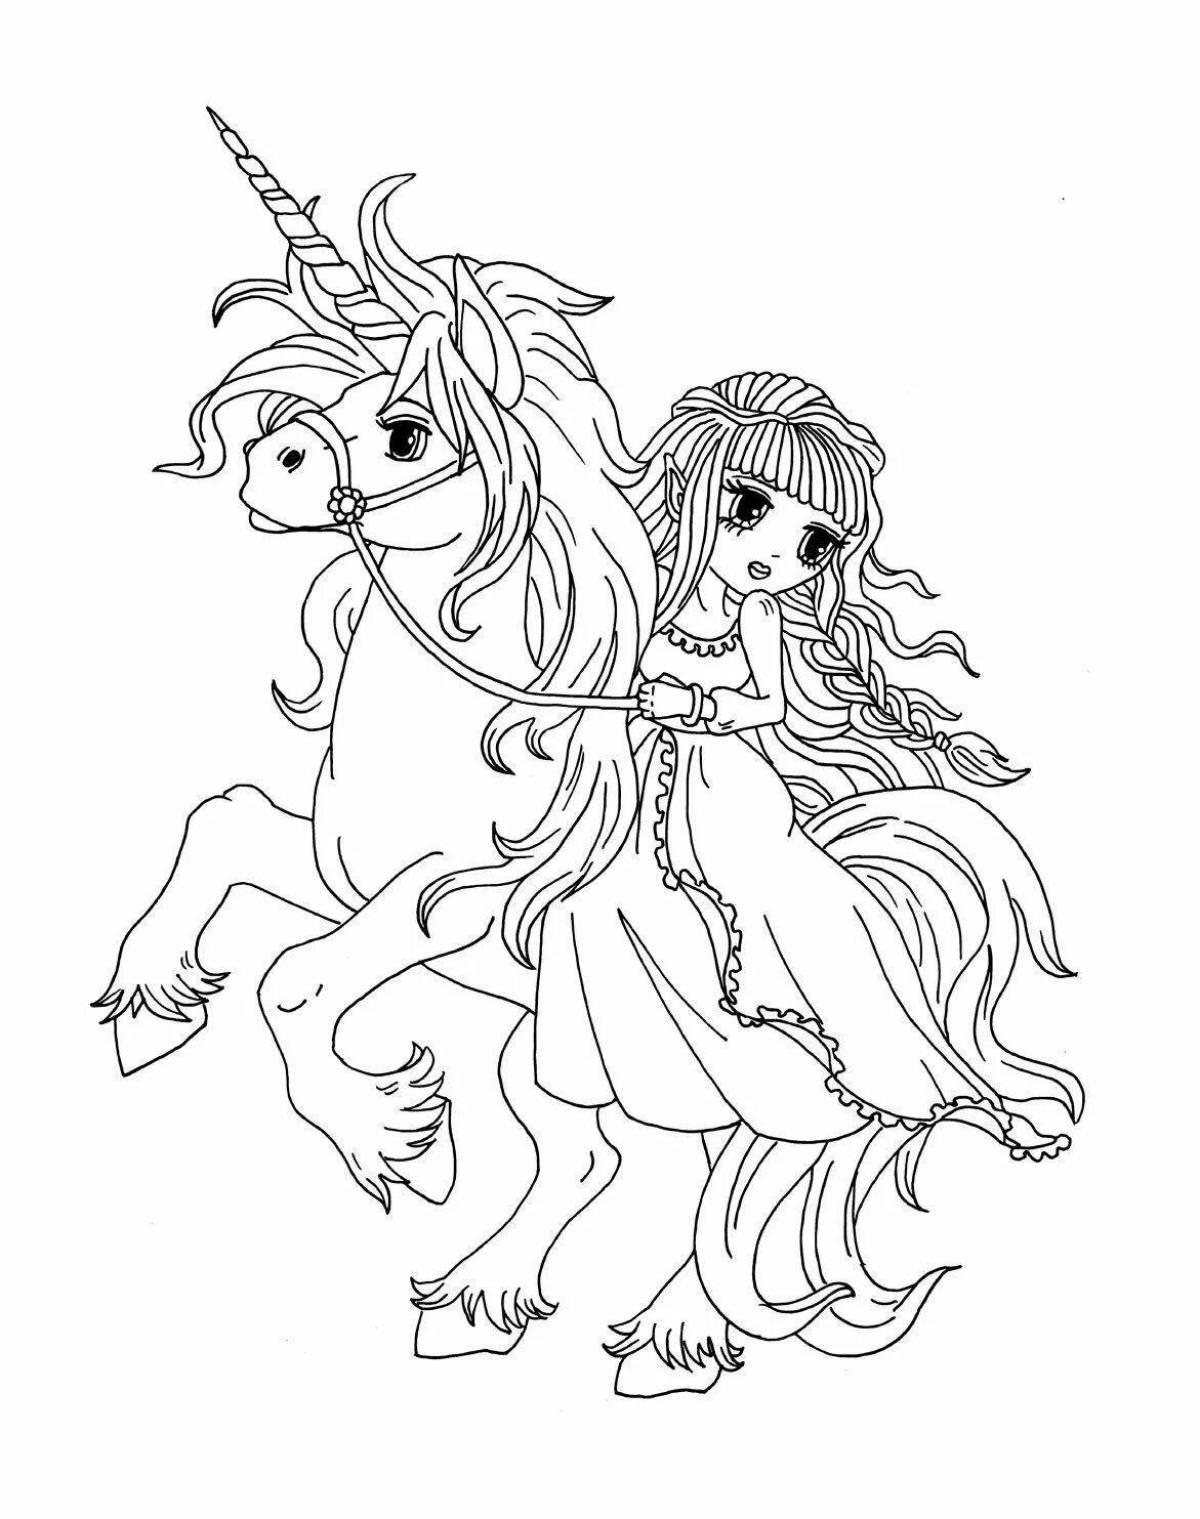 Charming anime unicorn coloring book